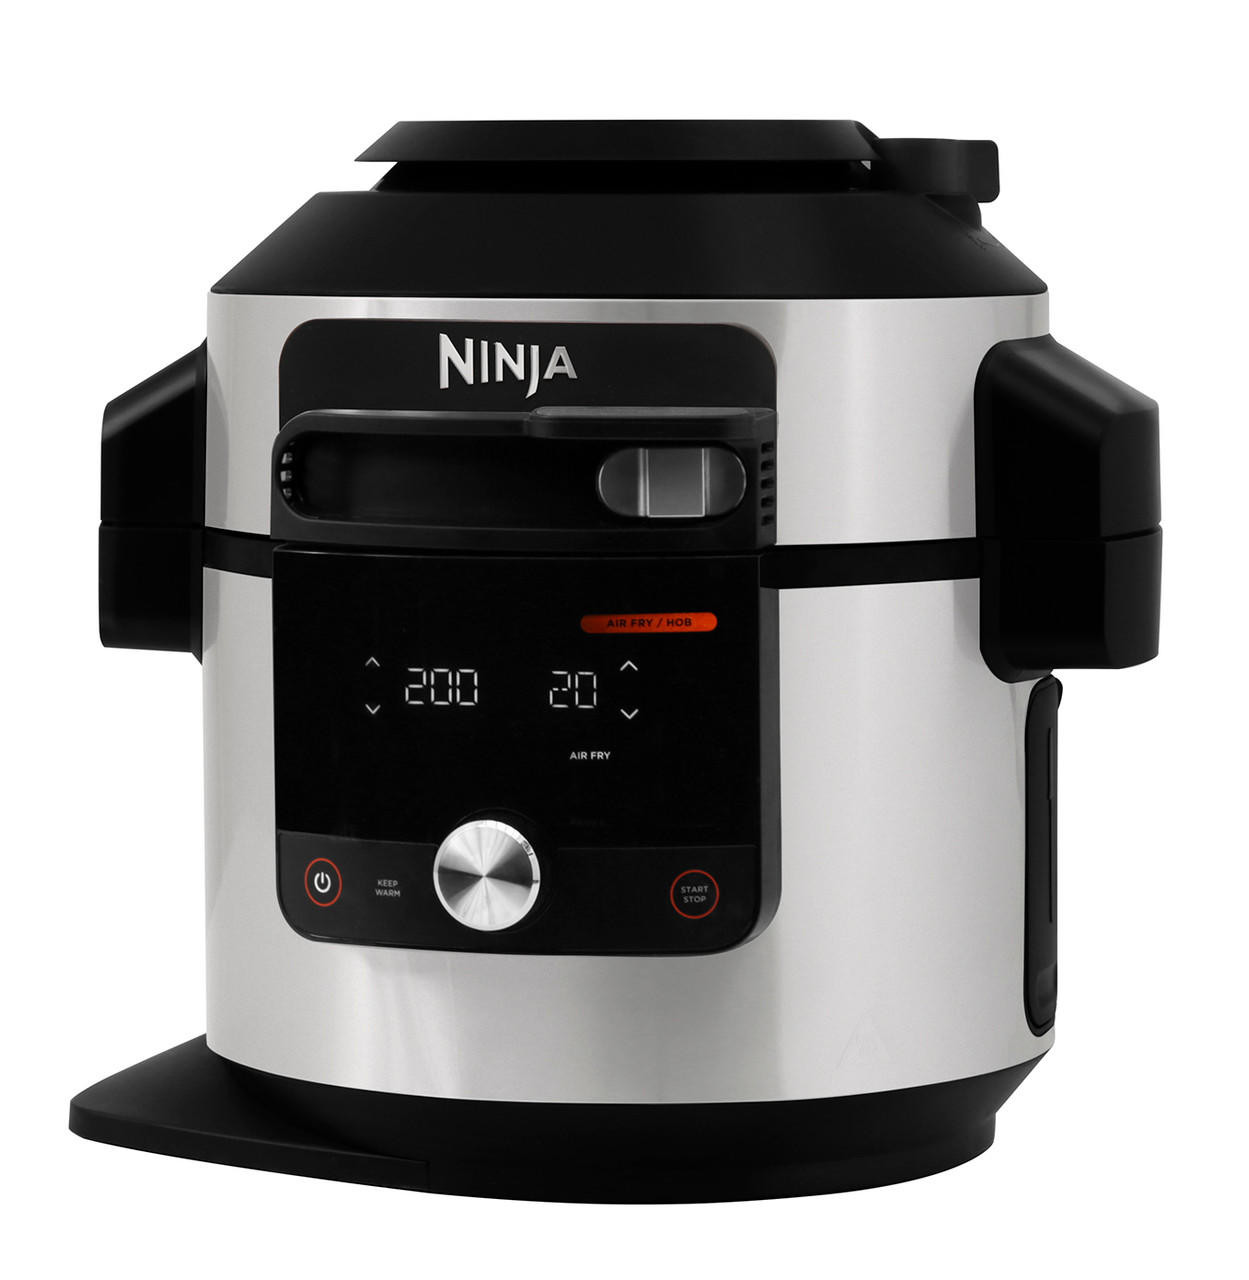 OL750UK, Ninja Multi Cooker, 15 Programmes